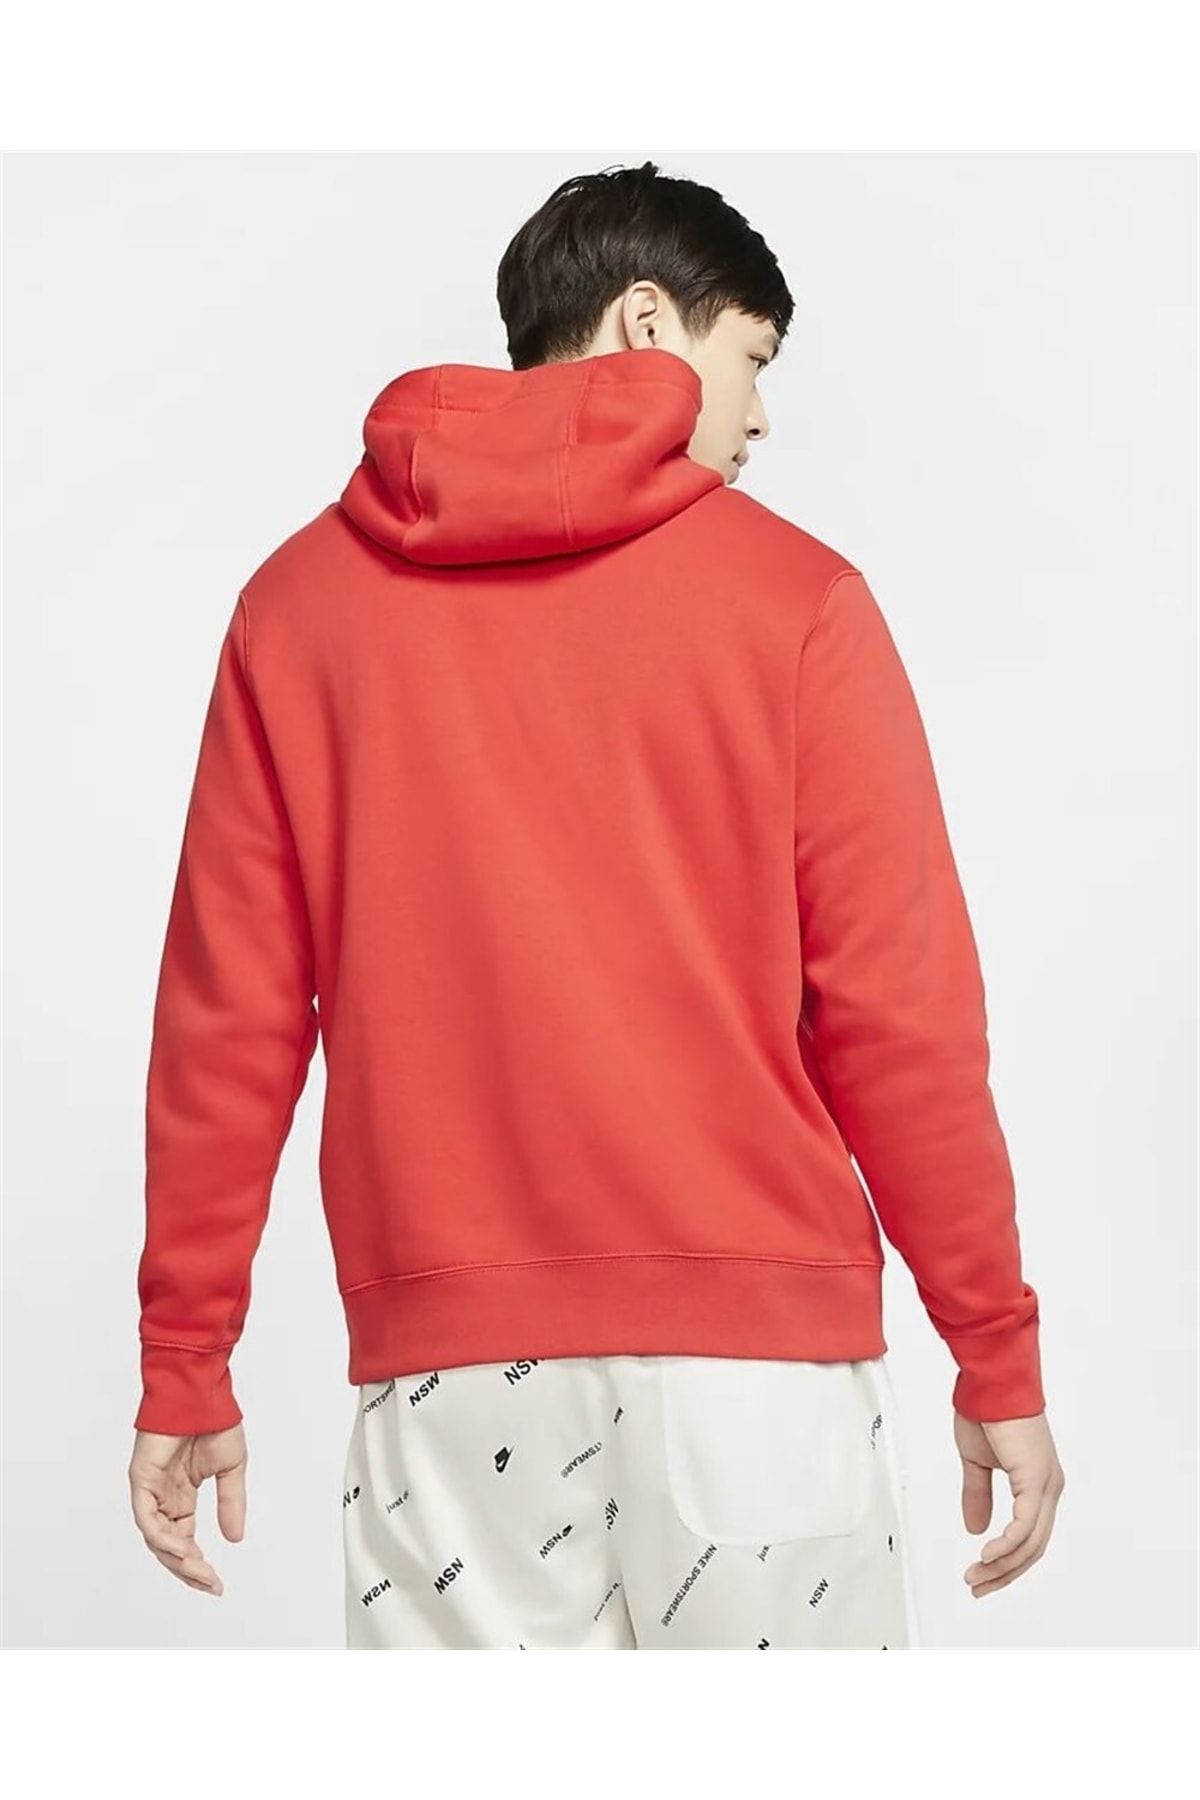 Nike Sports Sweatshirt - Red - Regular fit - Trendyol